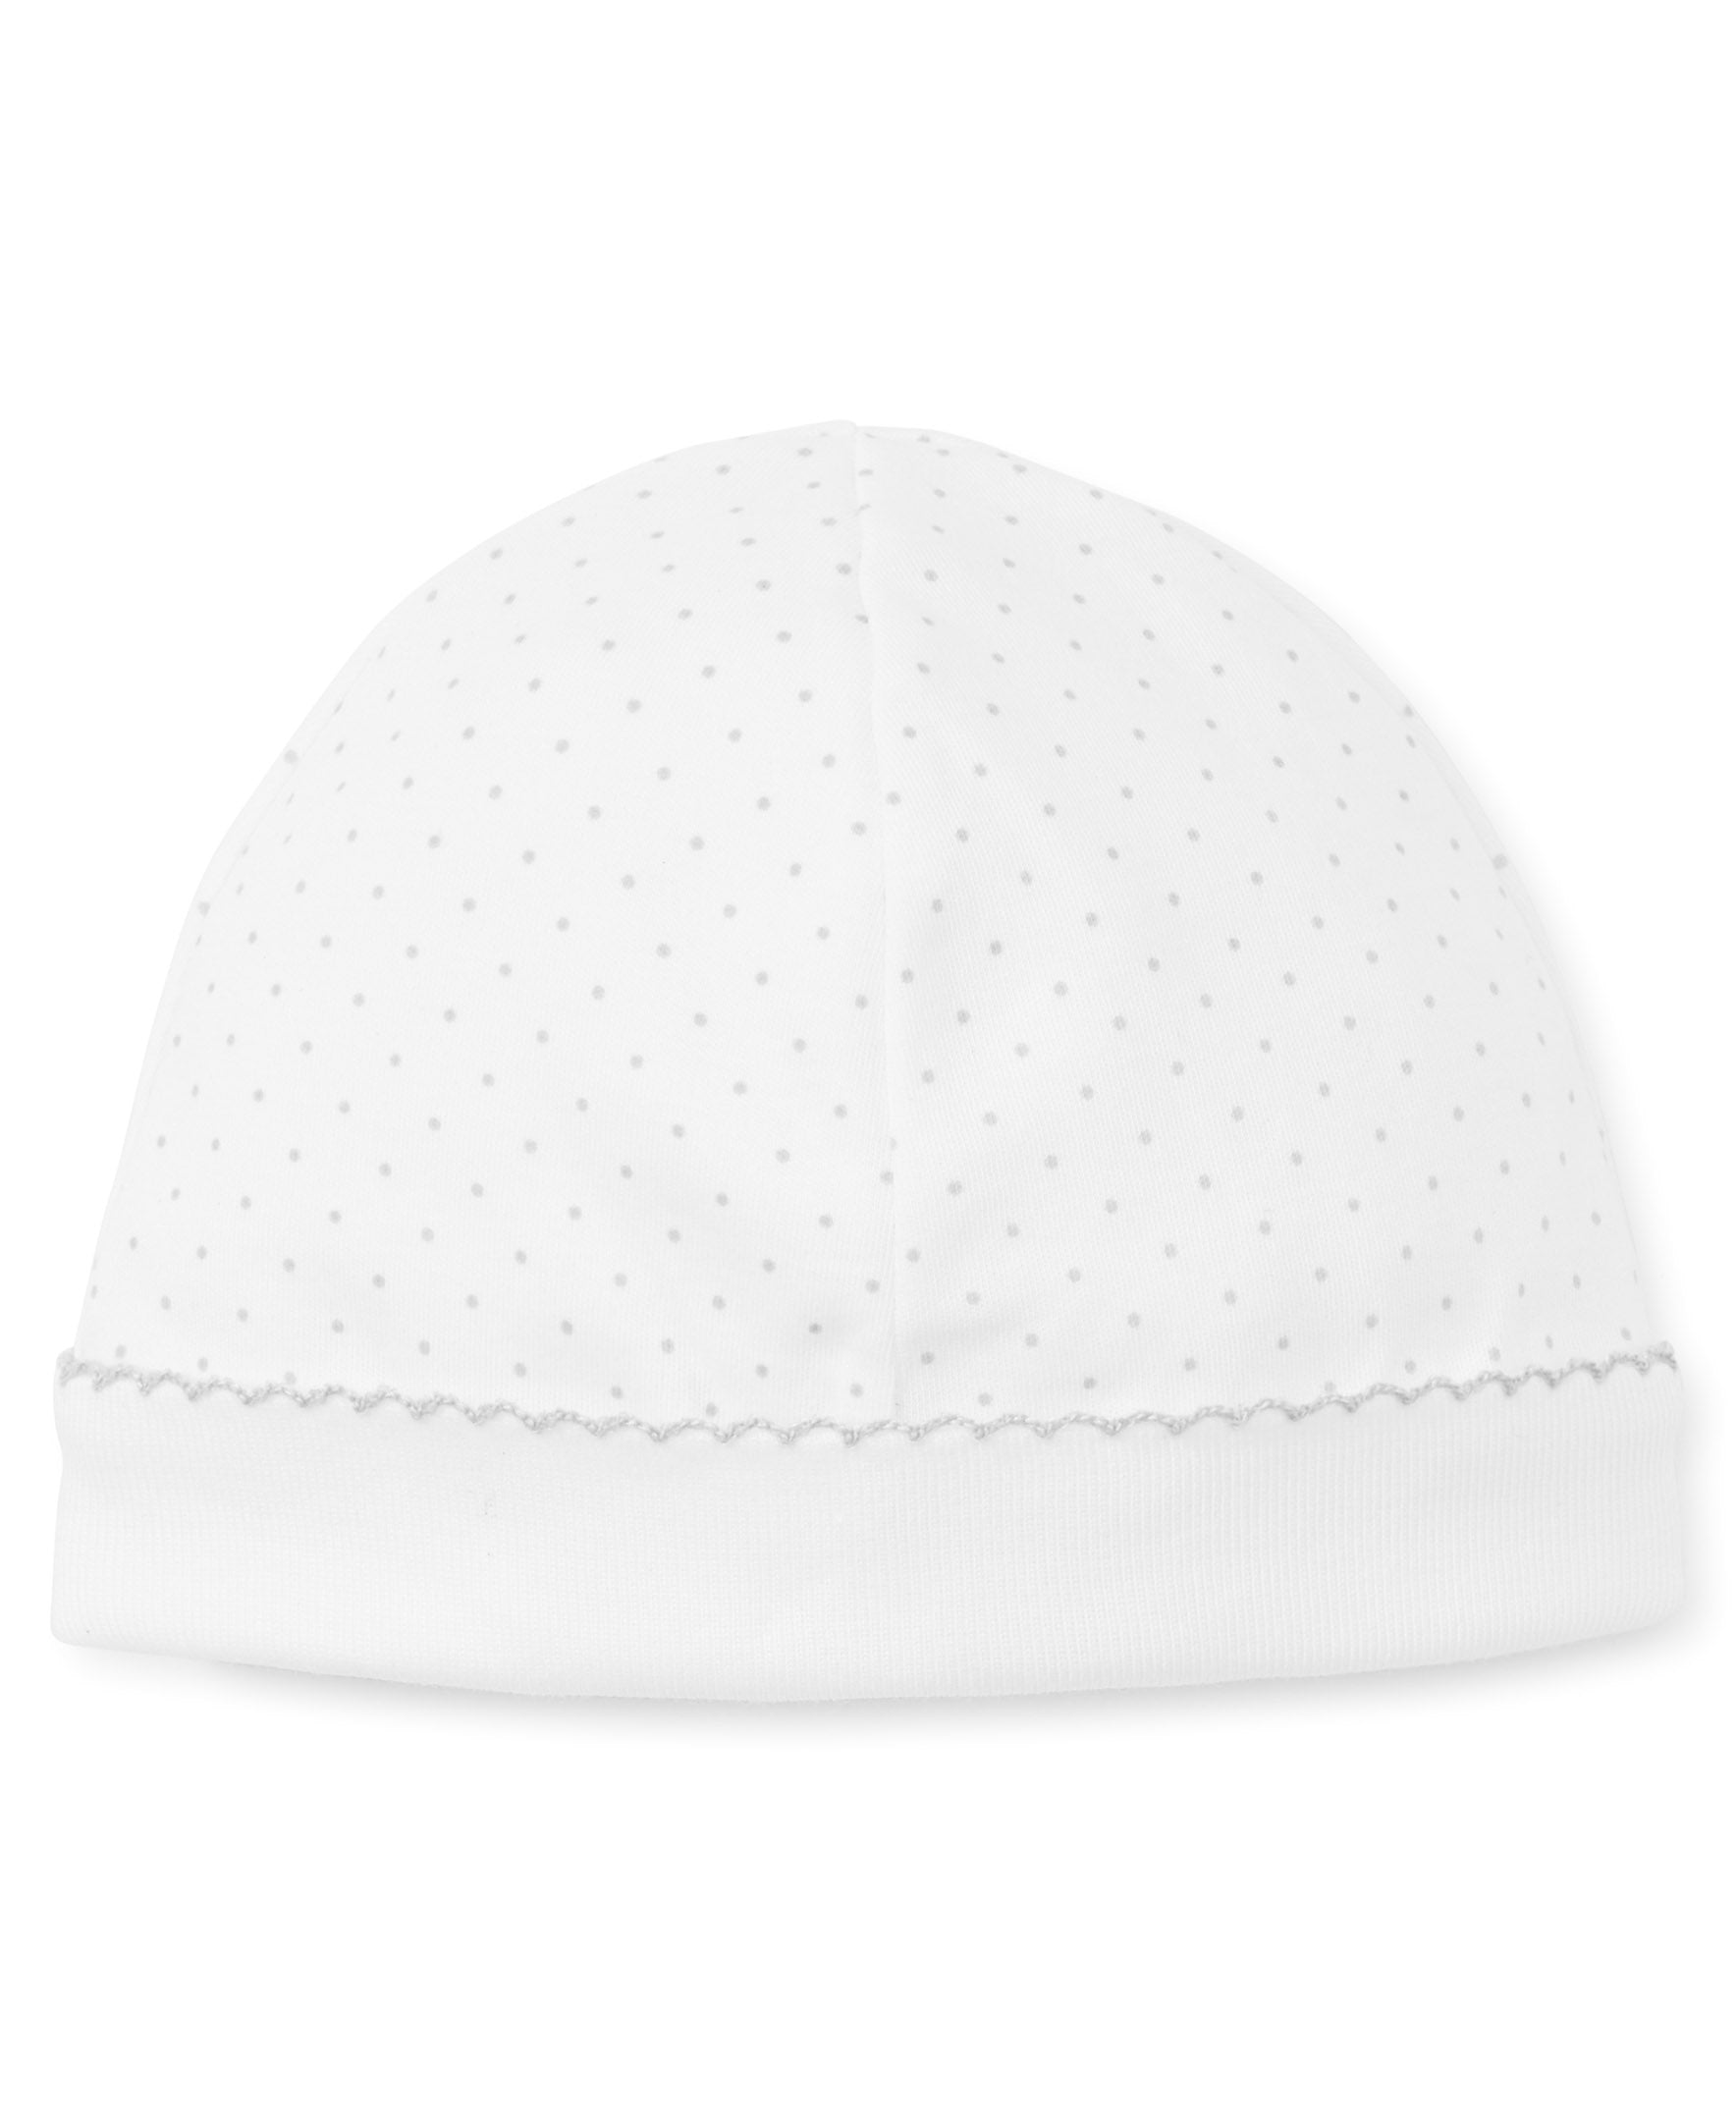 Personalized White/Silver New Kissy Dots Print Hat - Kissy Kissy